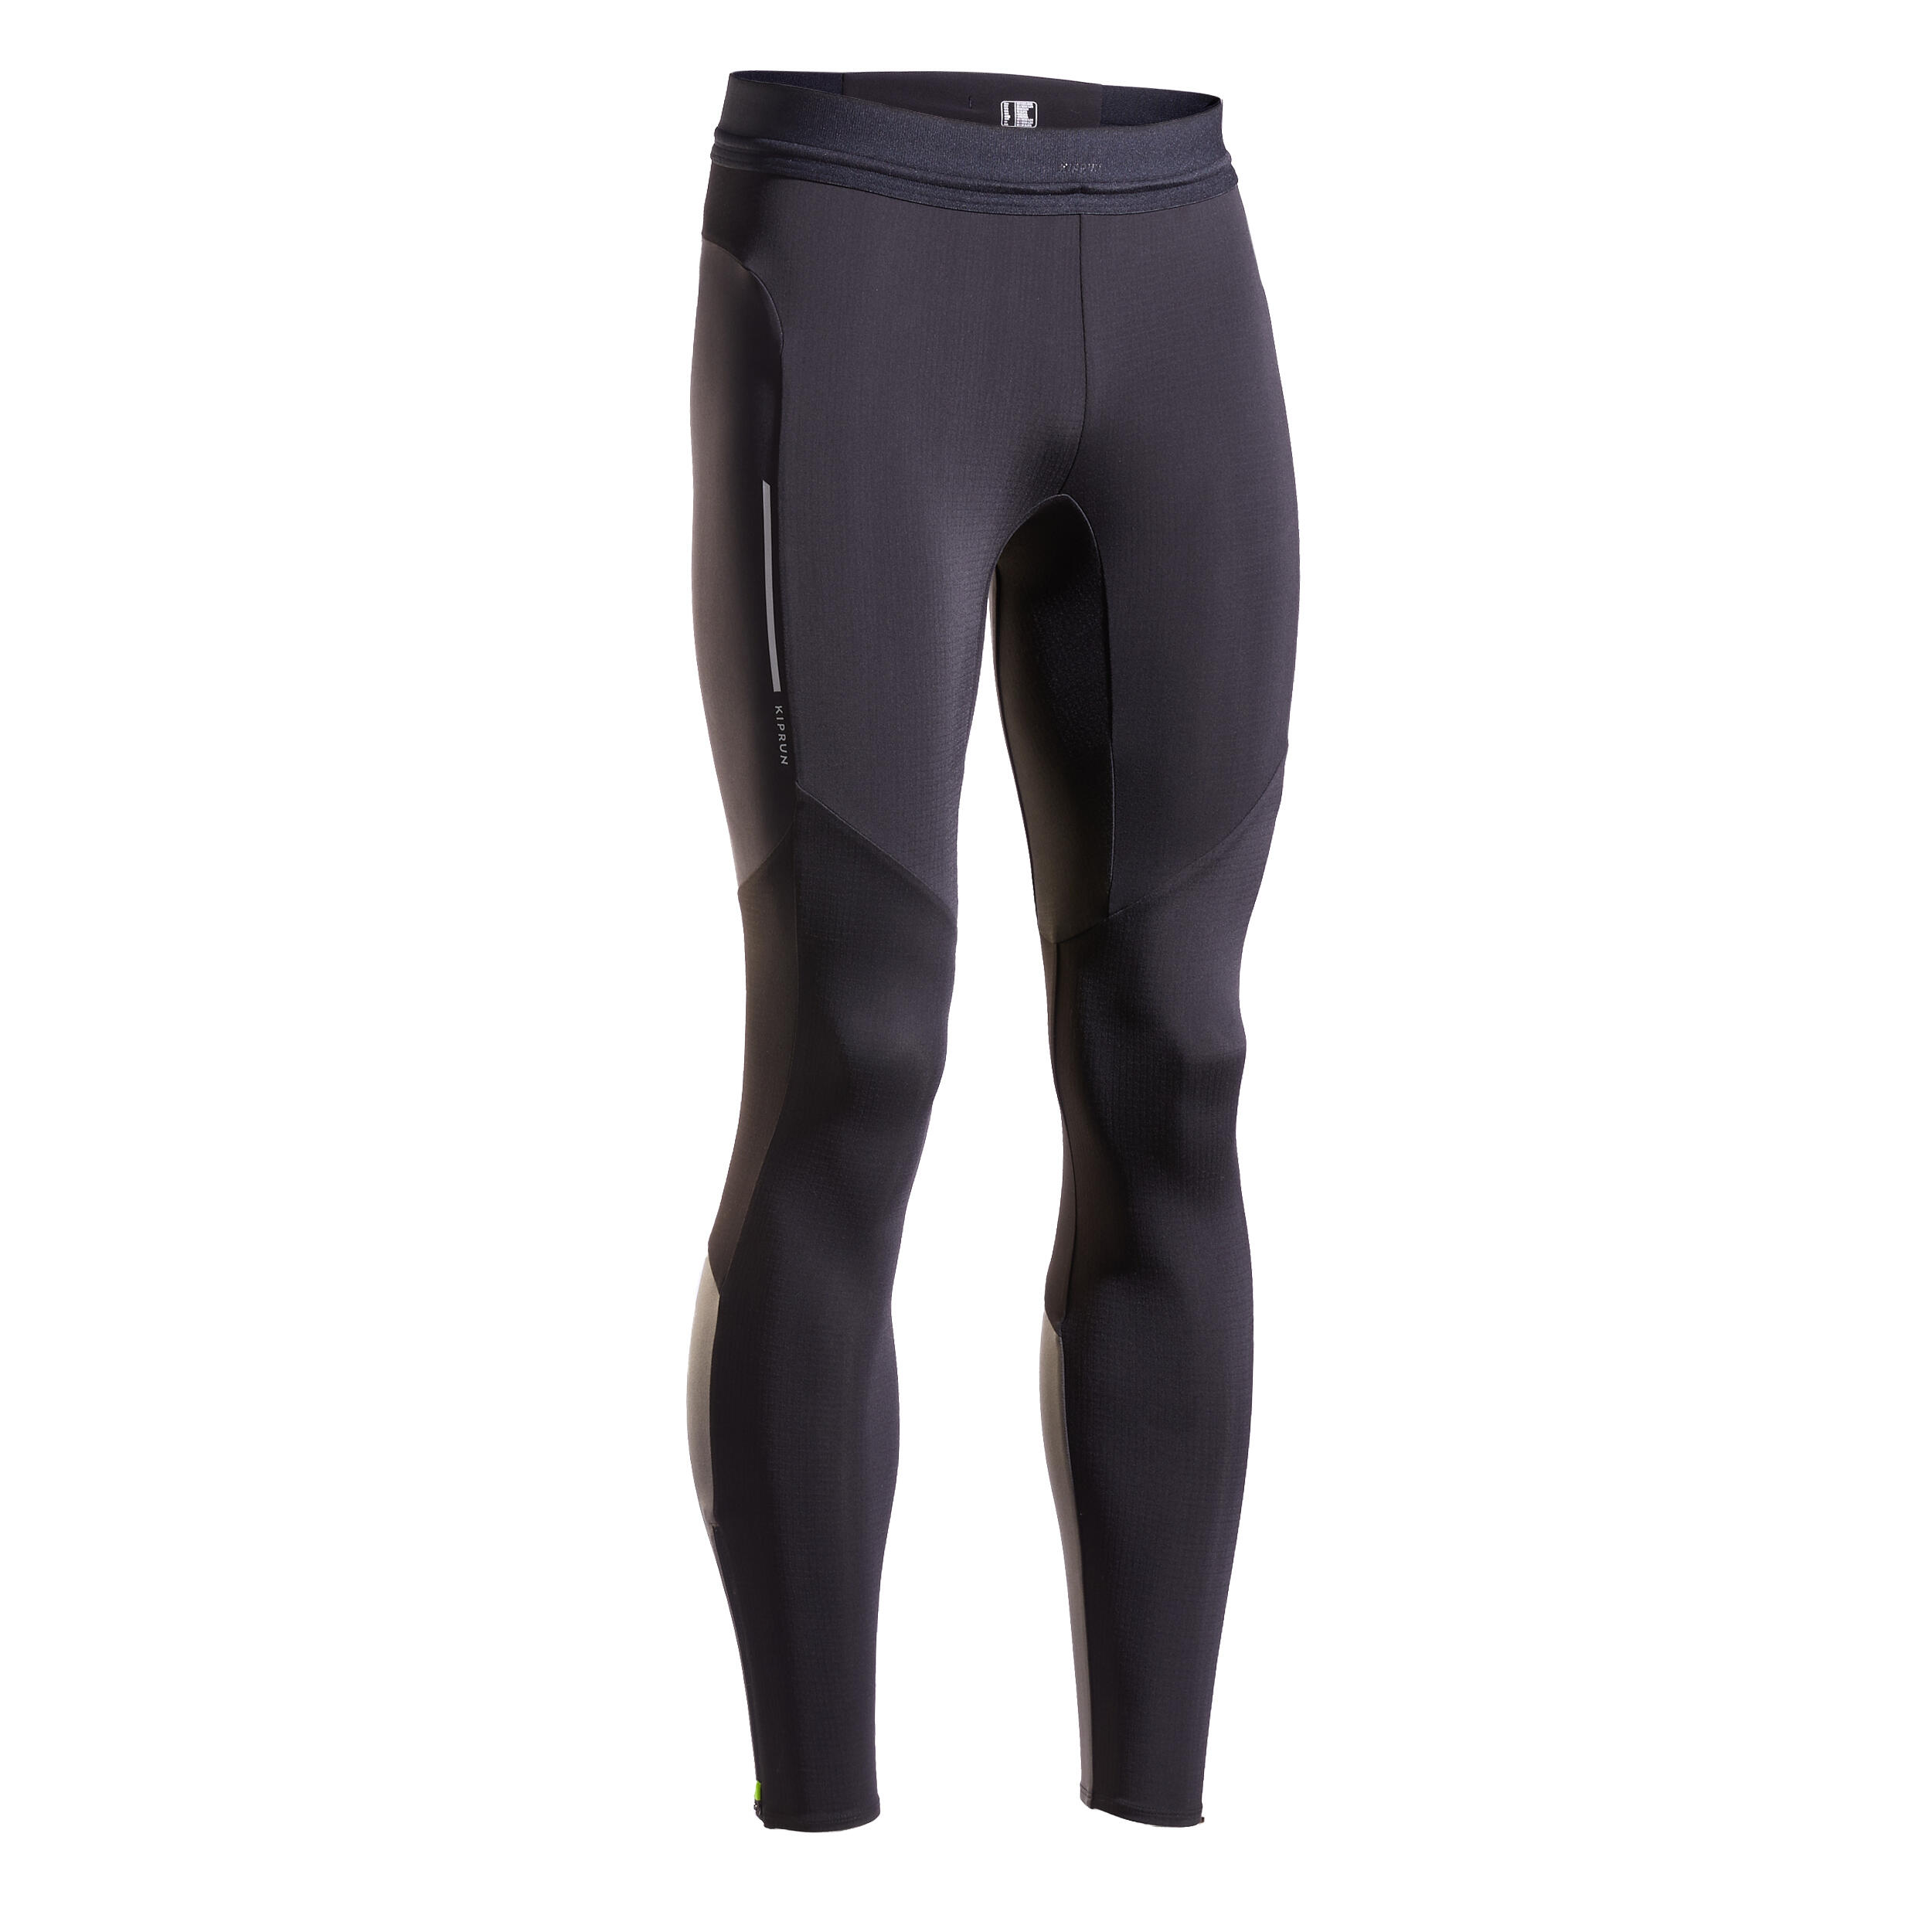 Decathlon tights men's quick-drying pants warm plus velvet running